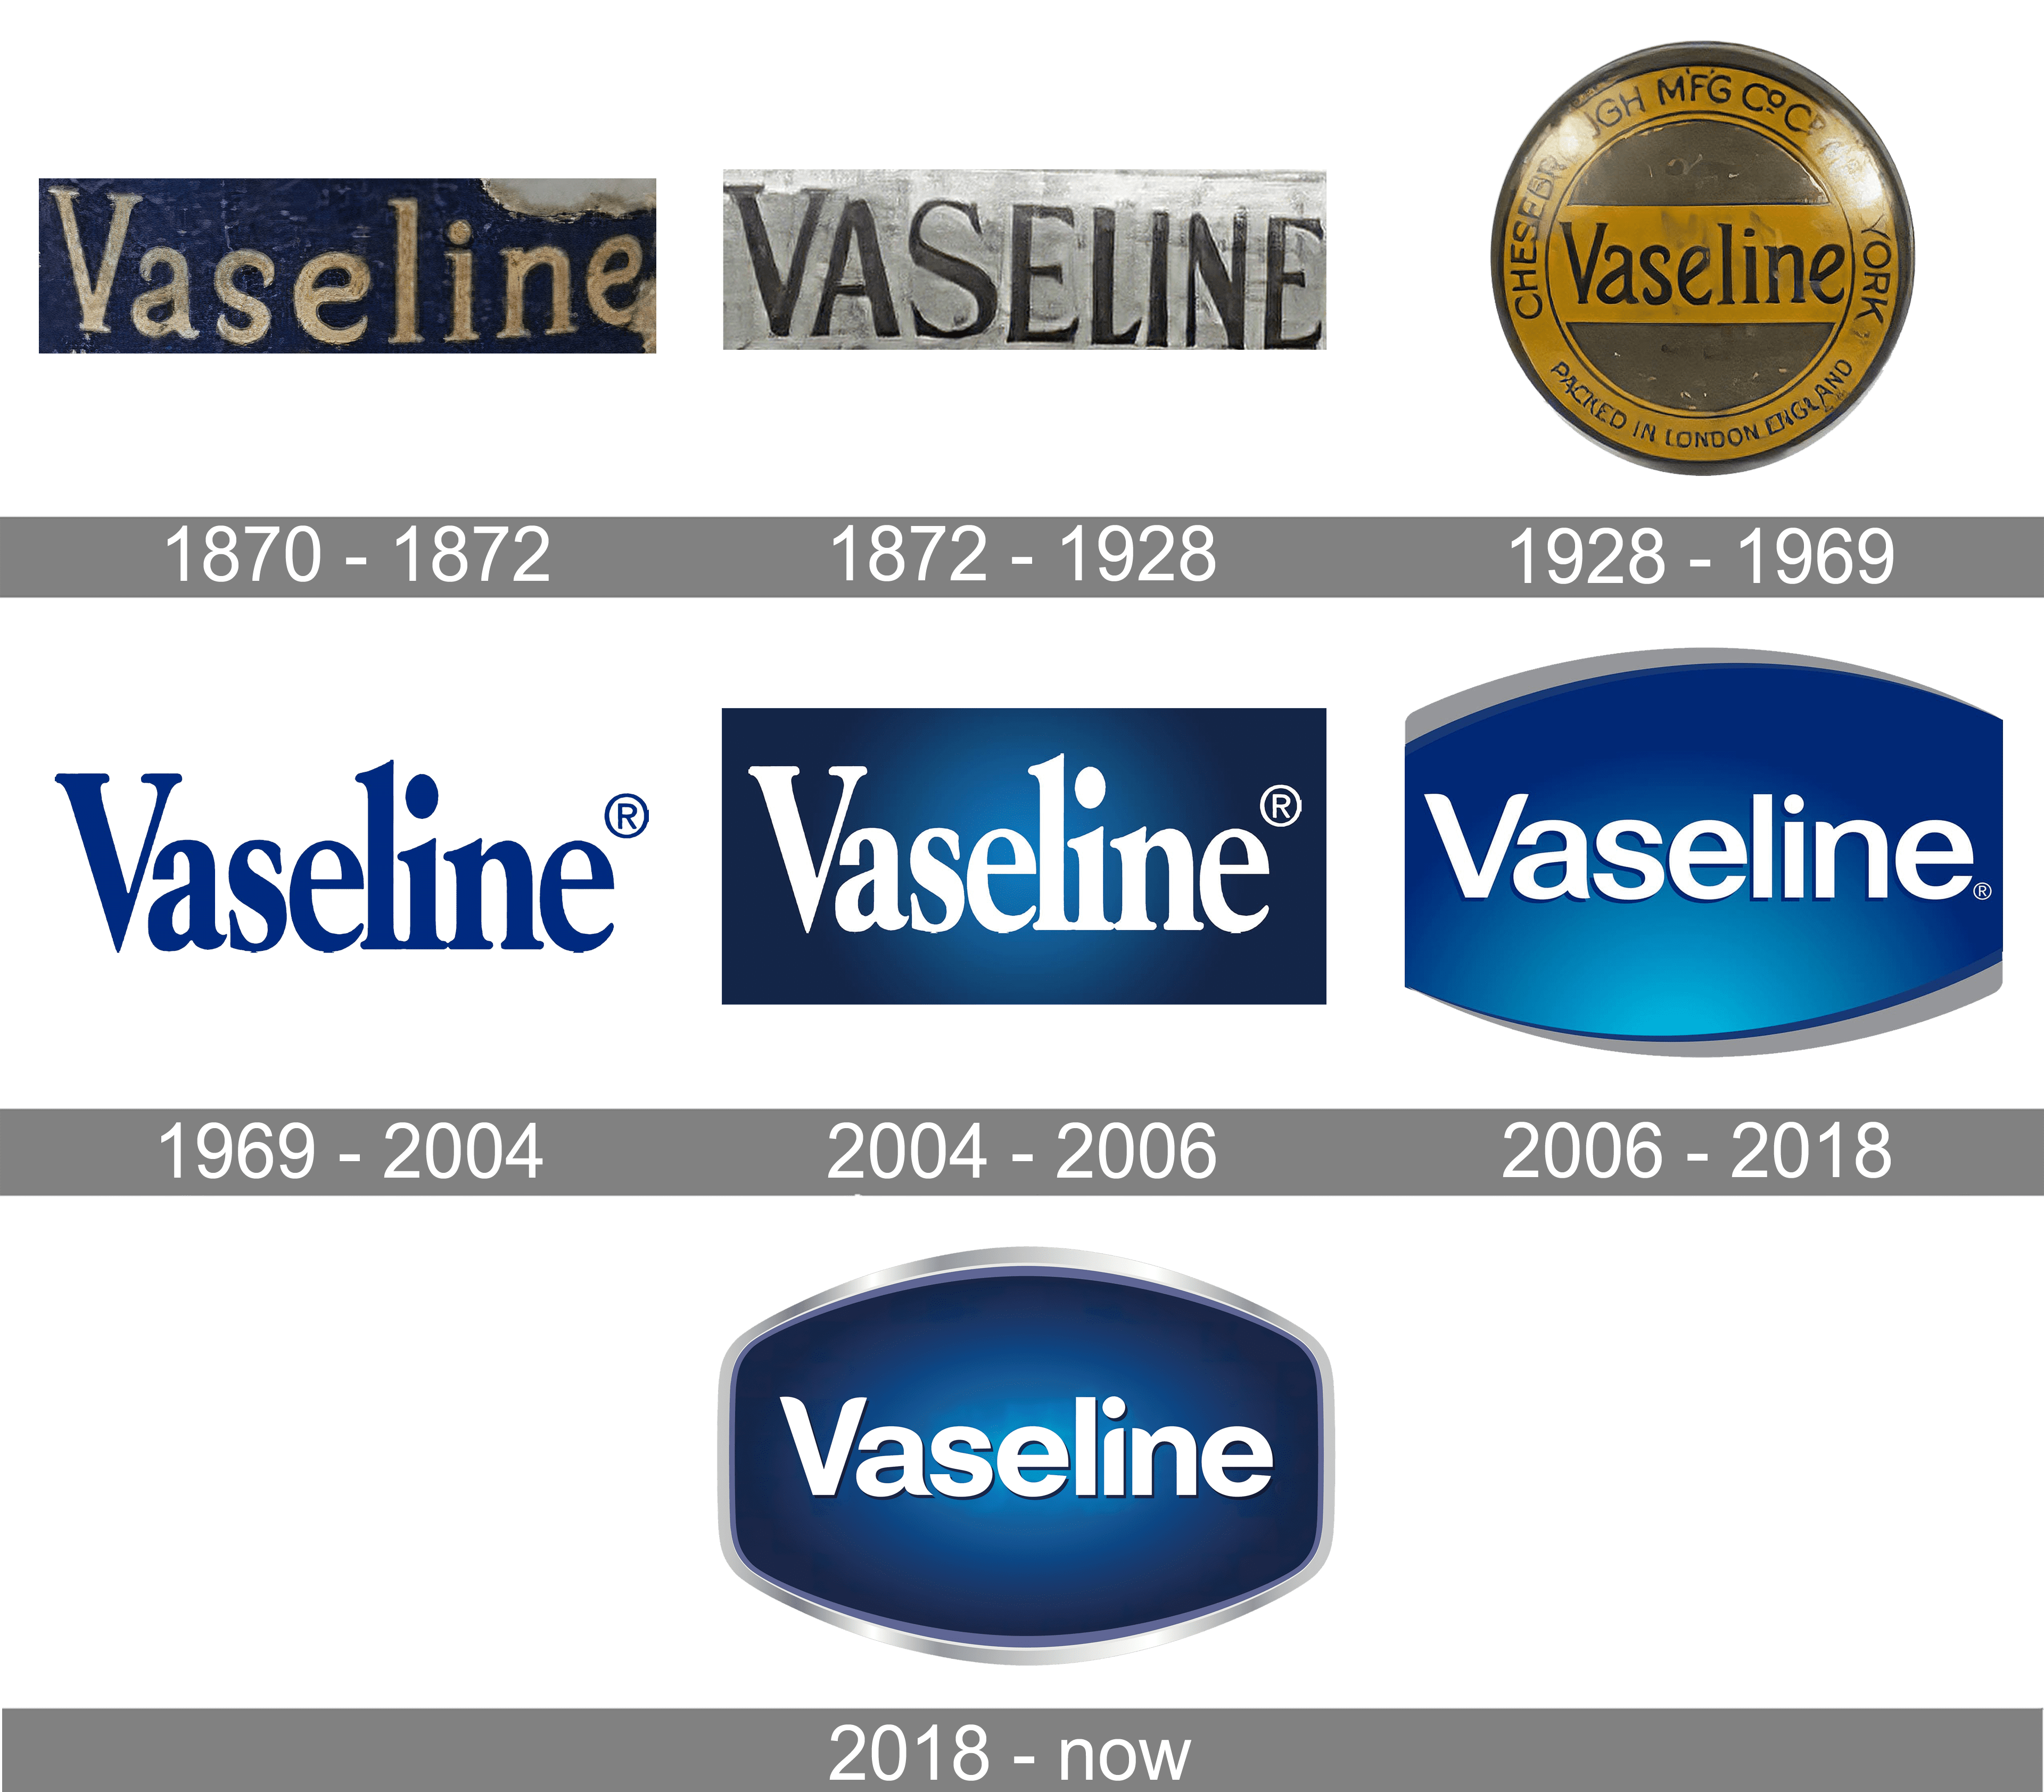 Vaseline rebranding and collateral design :: Behance